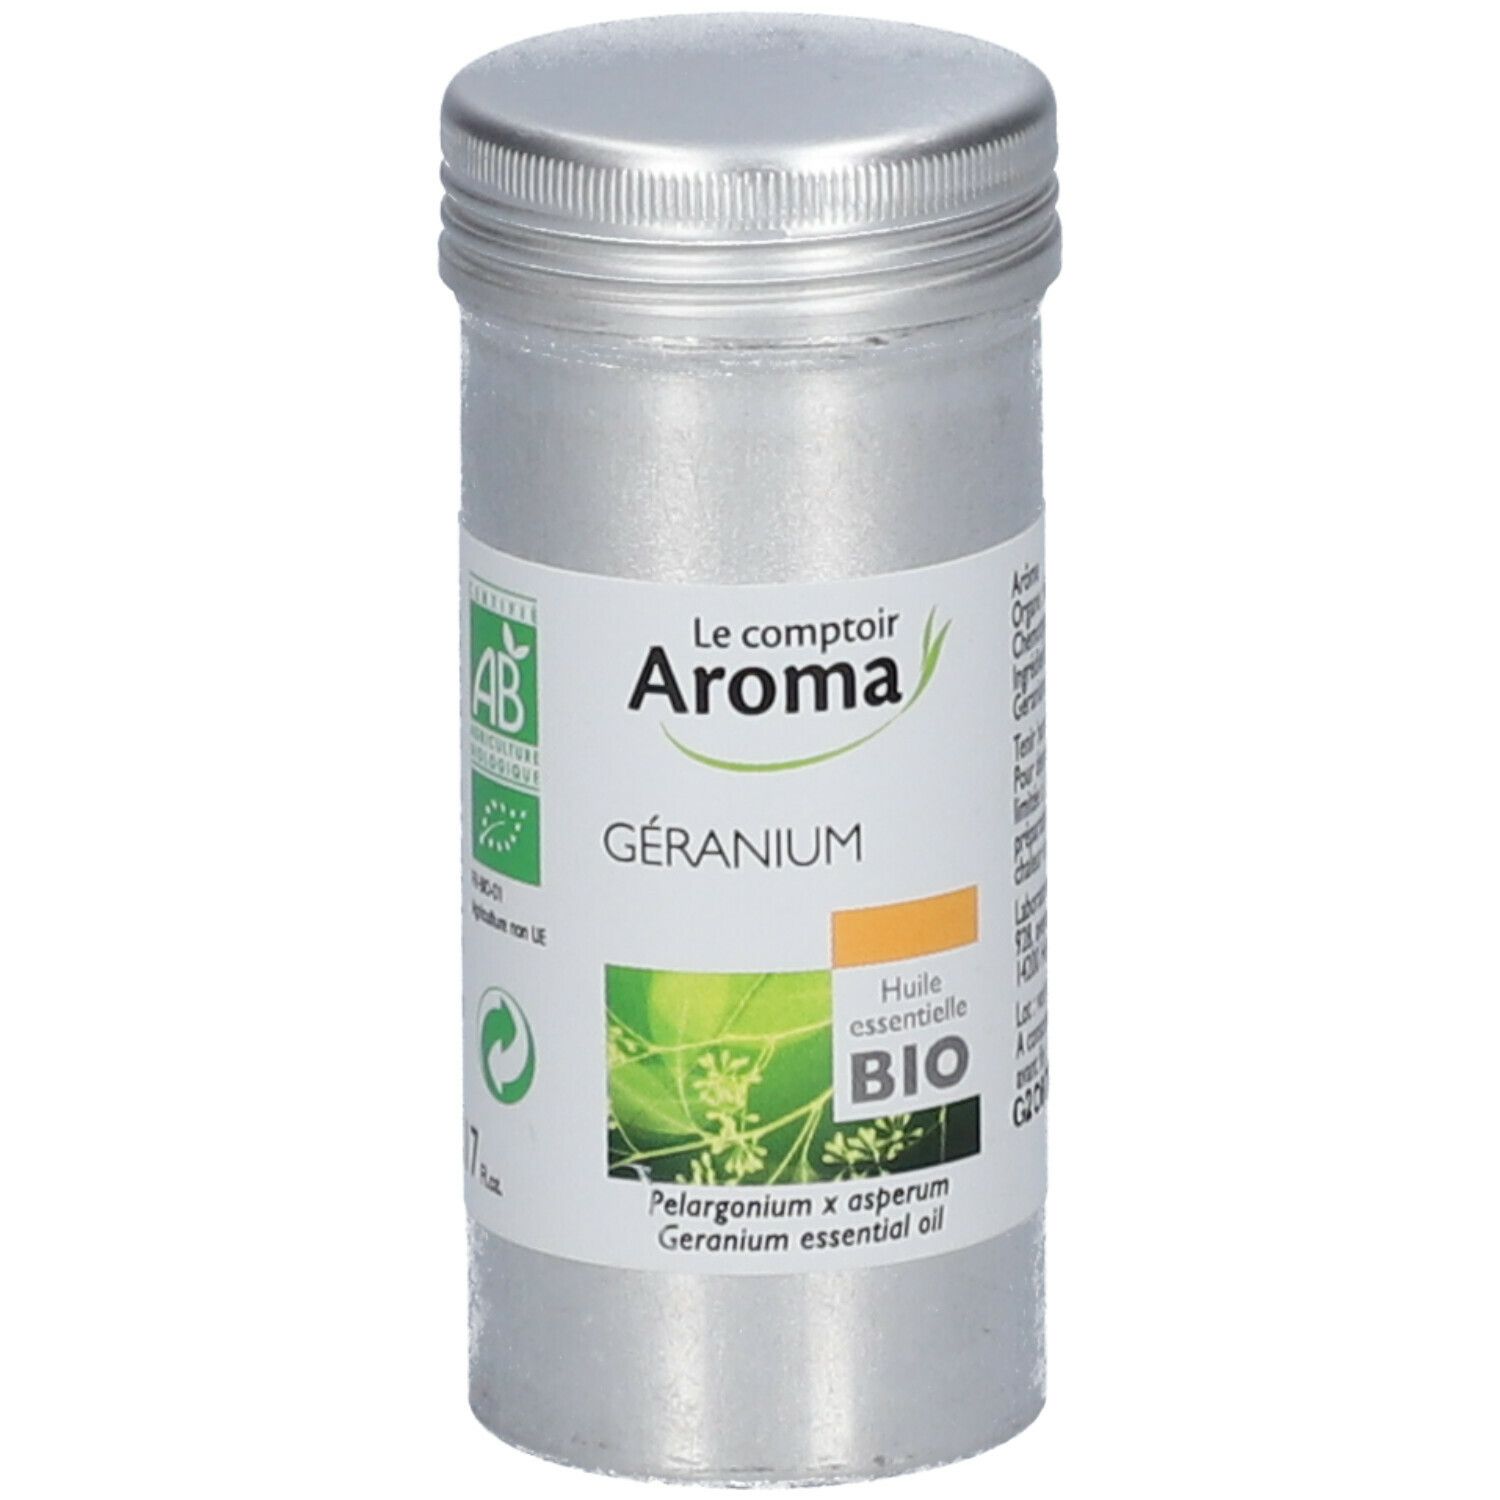 Le Comptoir Aroma Géranium